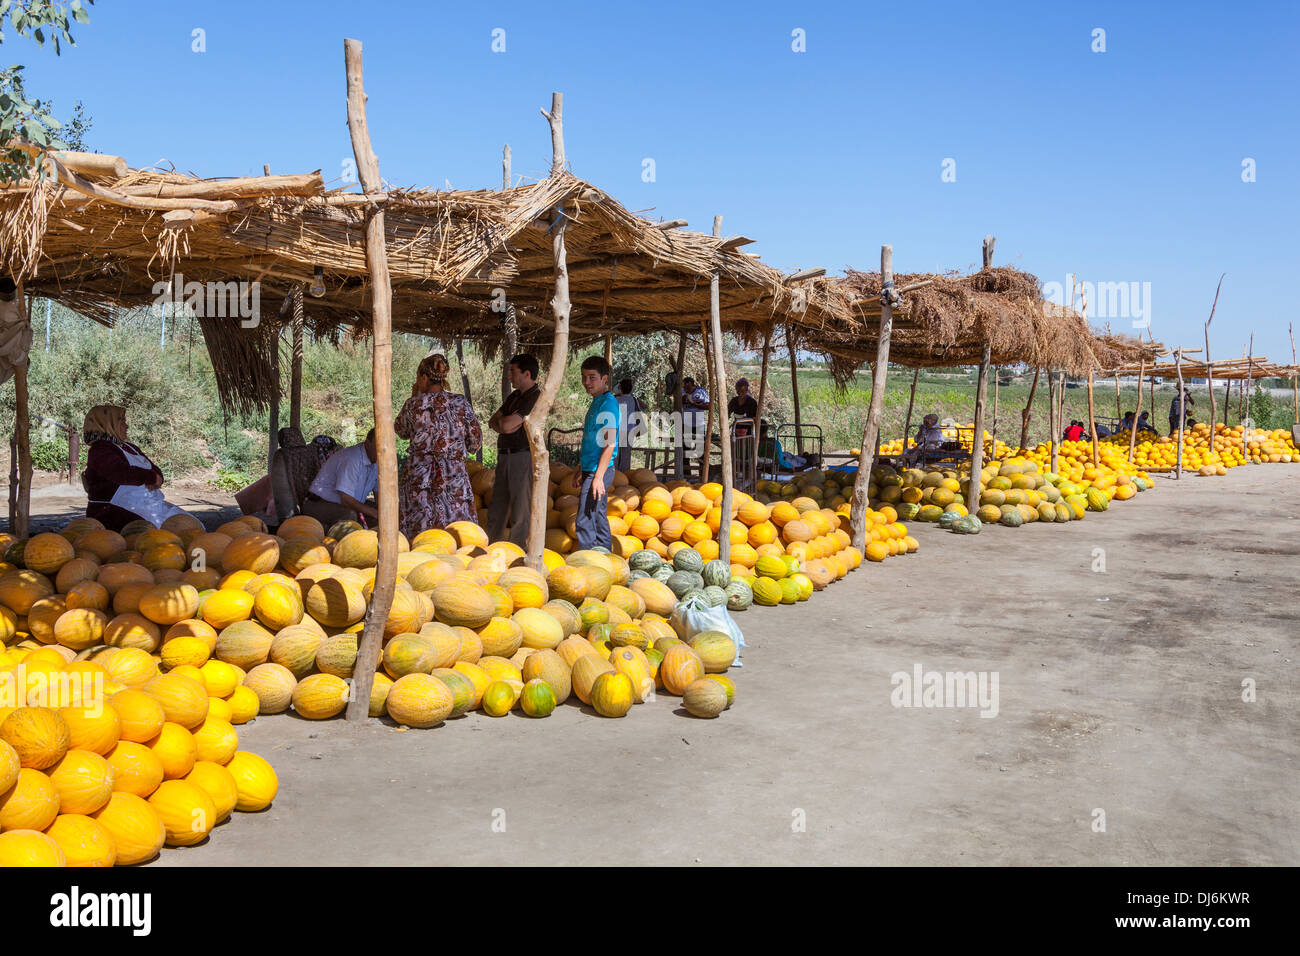 Melons for sale in an outdoor market, Shabboz, Beruniy District, near Urgench, Uzbekistan Stock Photo